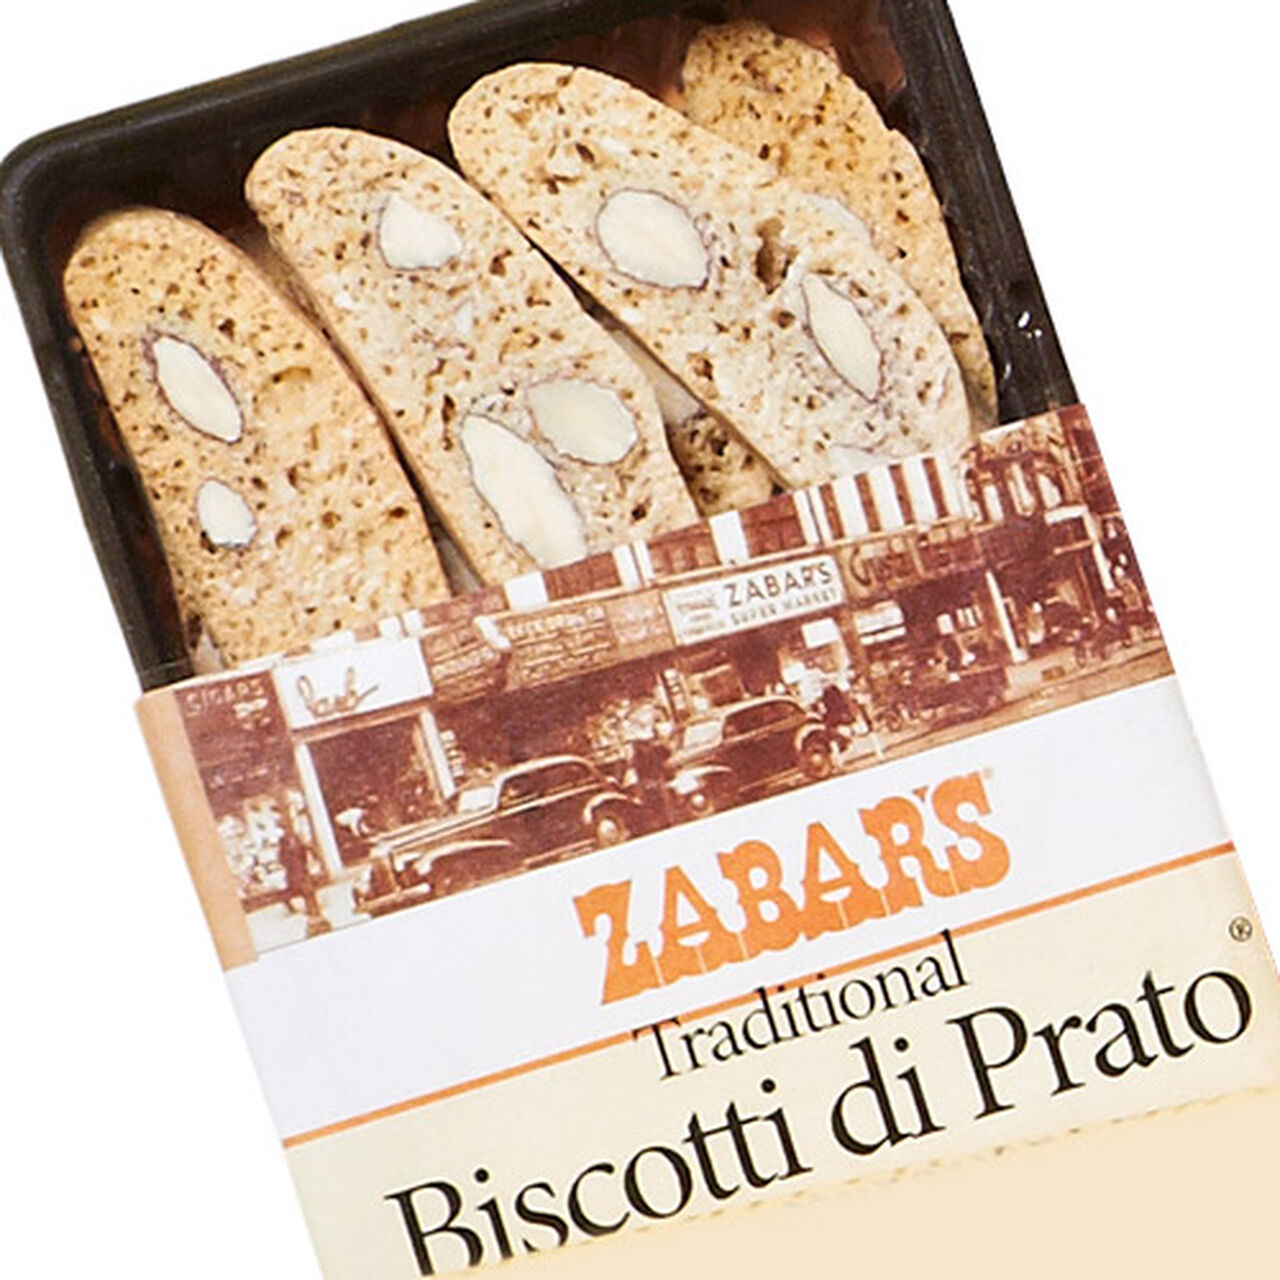 Zabar's Traditional Biscotti Di Prato (4.6oz), , large image number 0